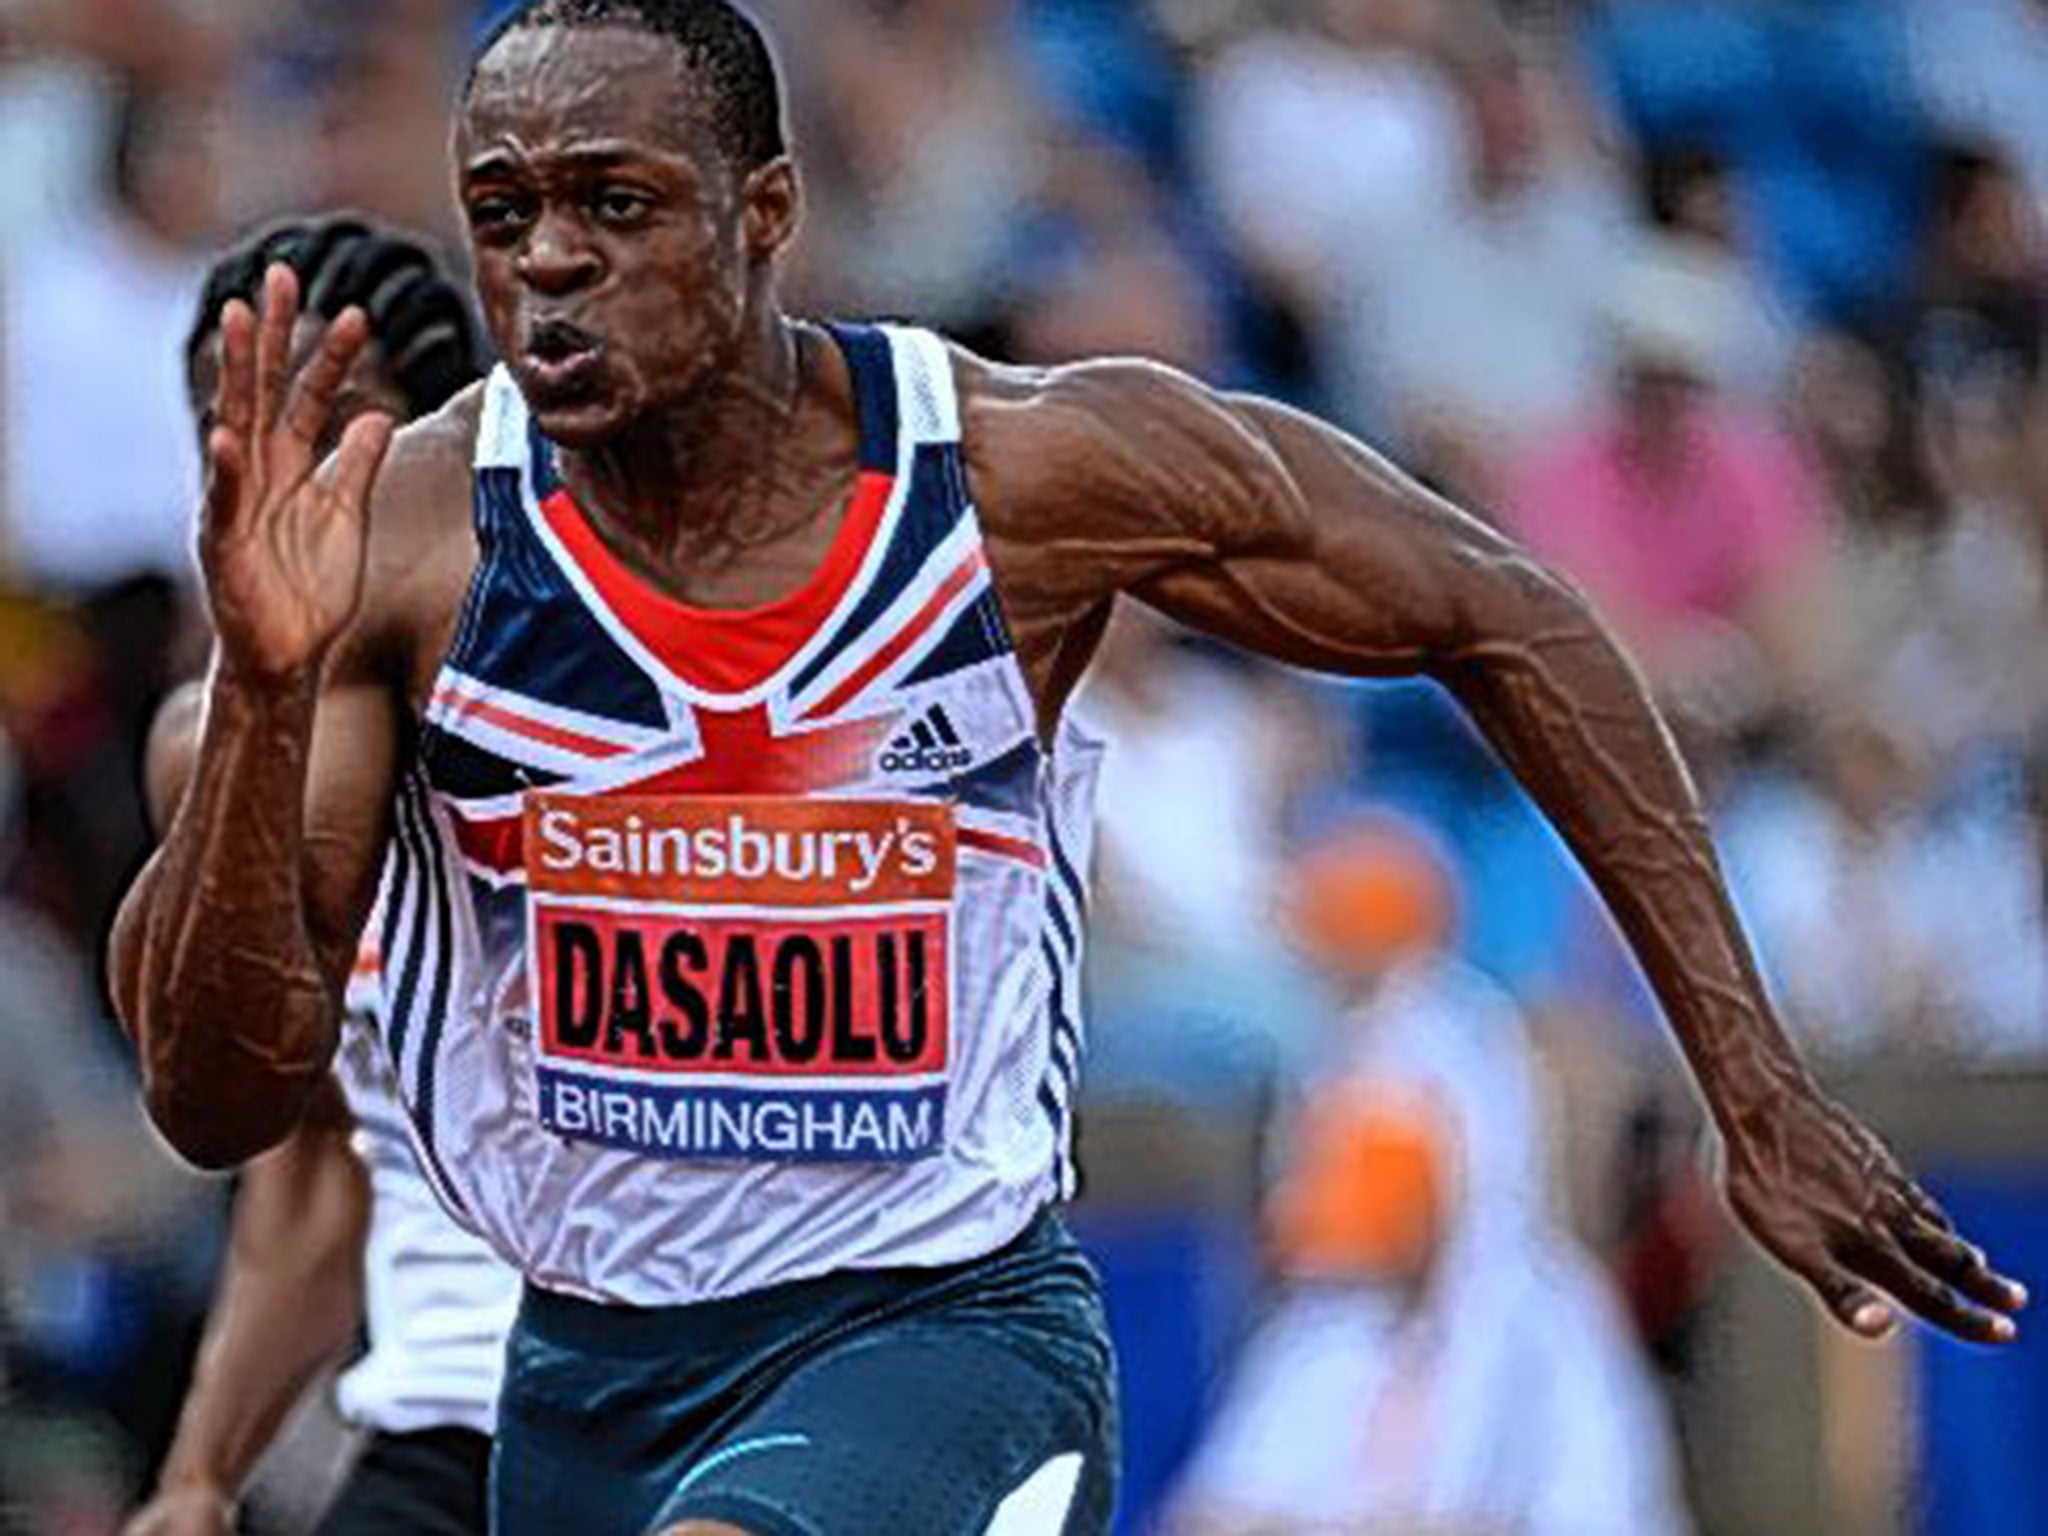 James Dasaolu runs his personal best of 9.91sec in the 100m in Birmingham last summer